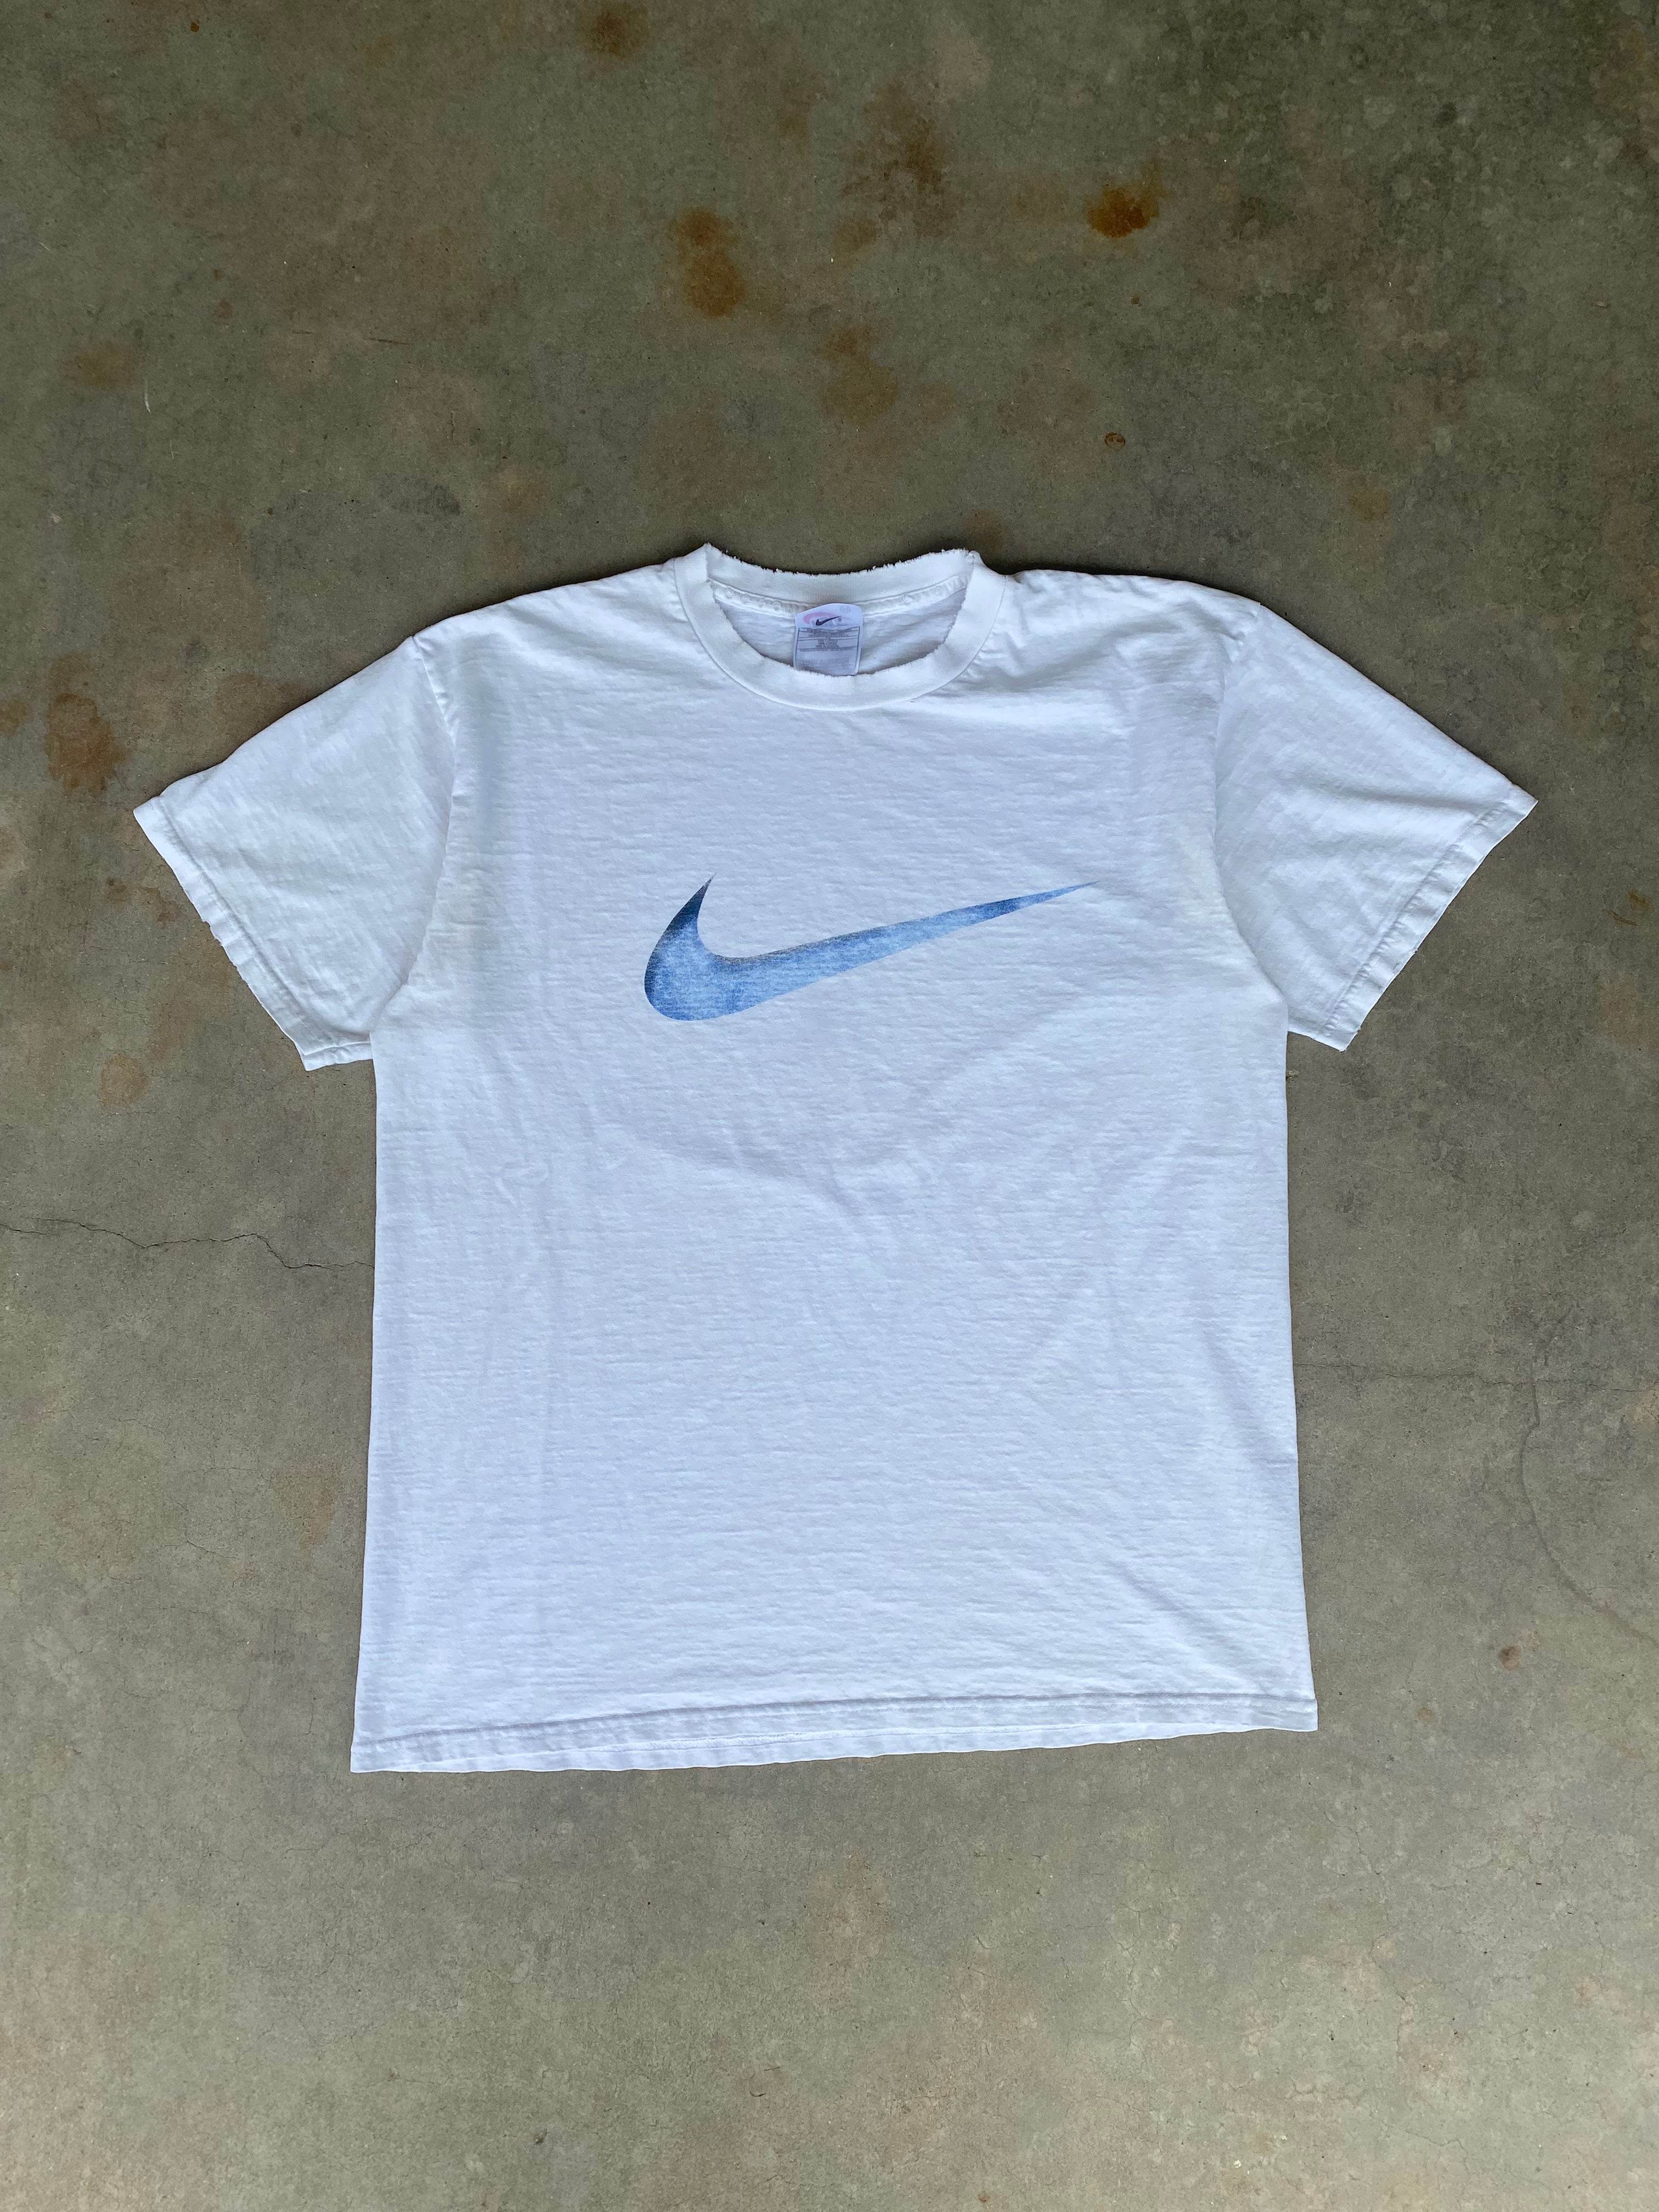 1990s Distressed Nike T-Shirt (M)